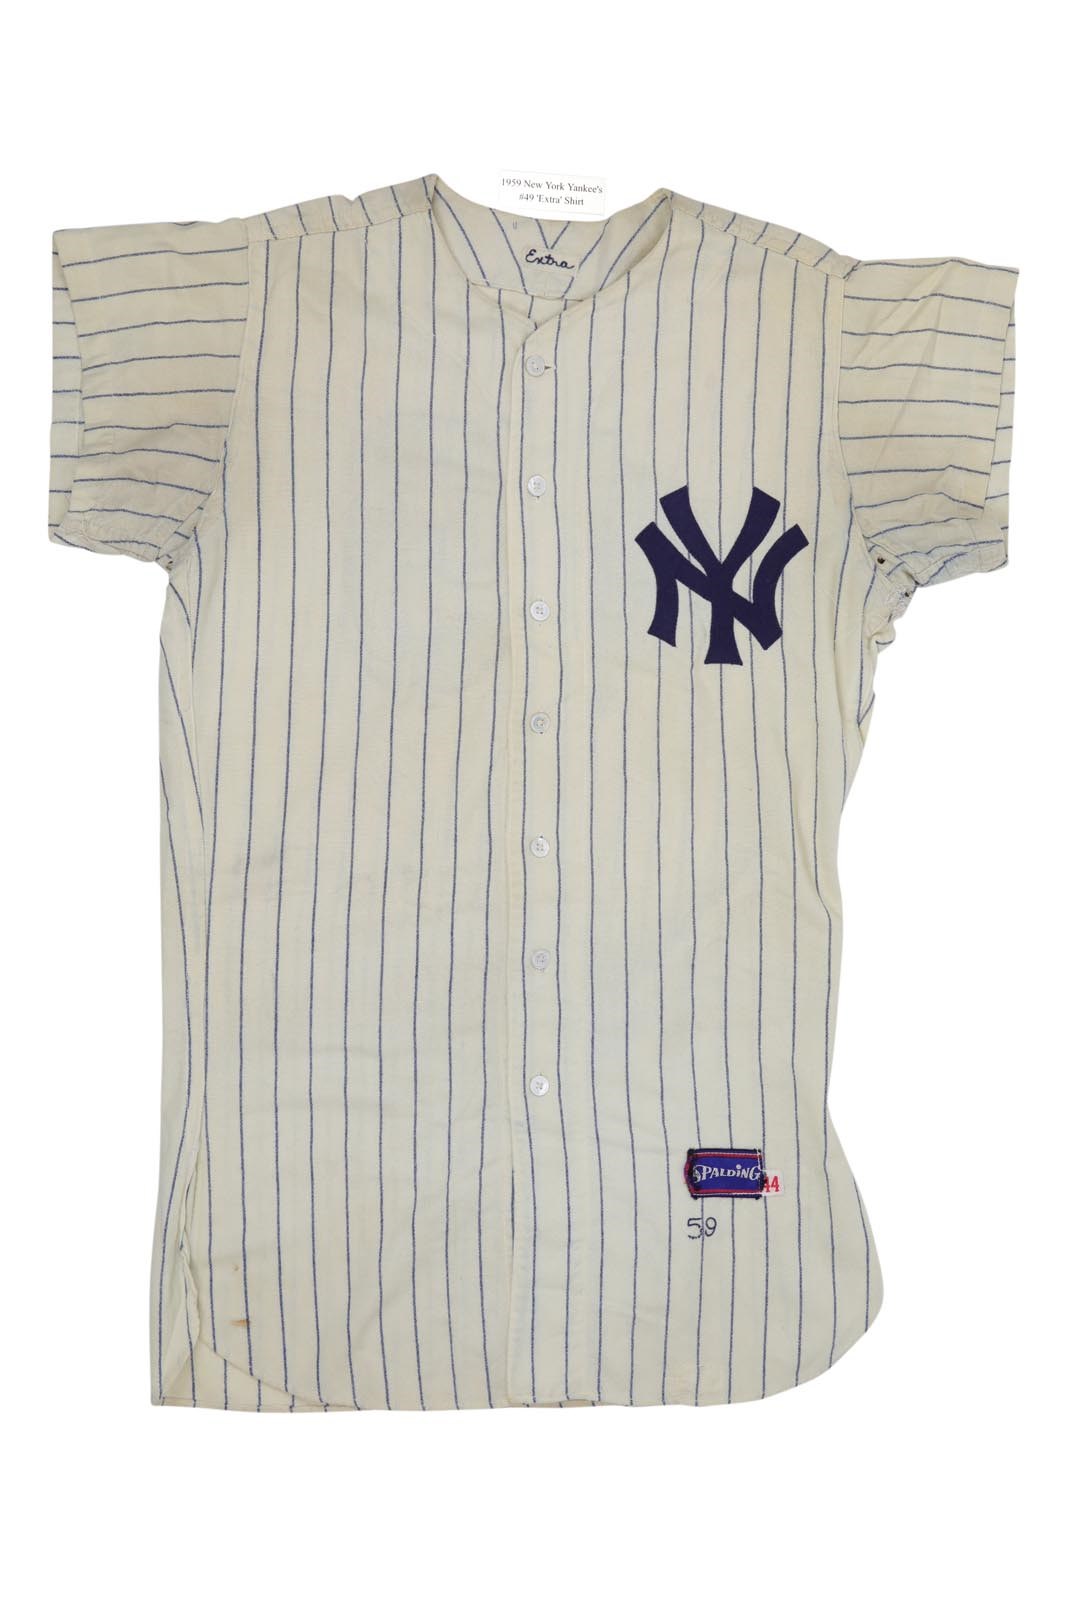 - 1959 Jim Bronstad New York Yankees Home Jersey